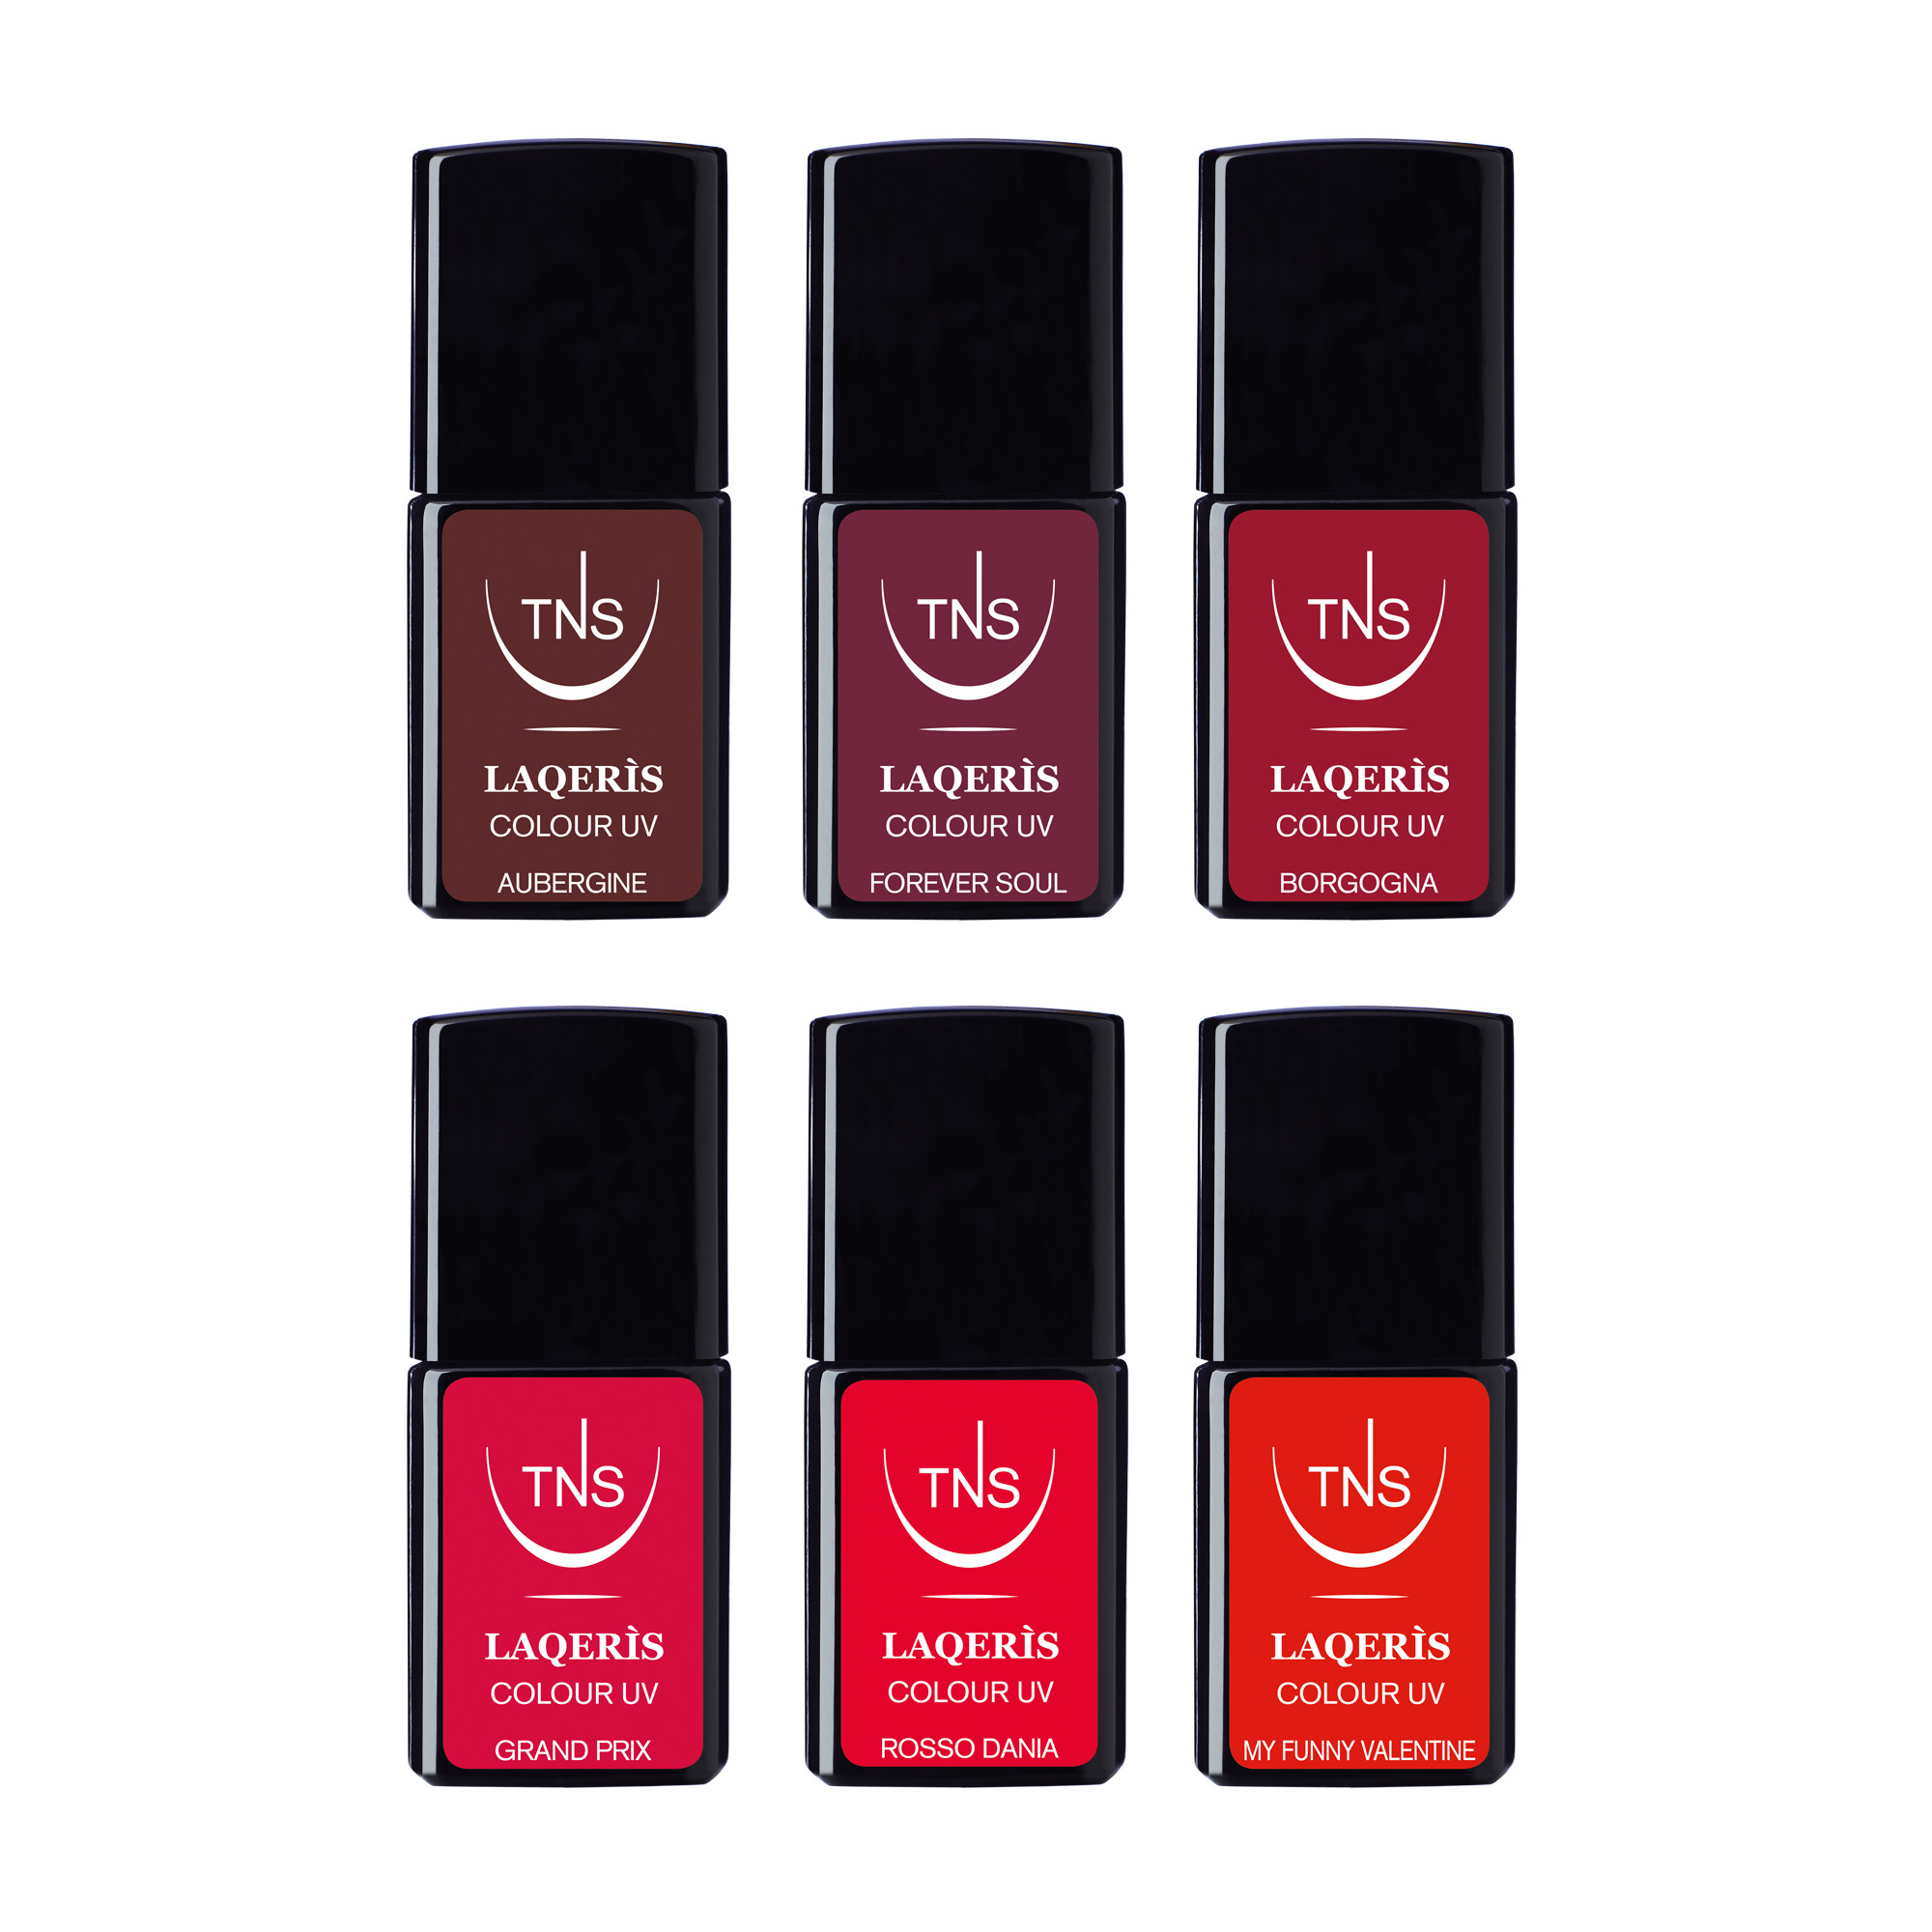 Laqerìs Icons Display red semi-permanent nail polishes 6 pcs